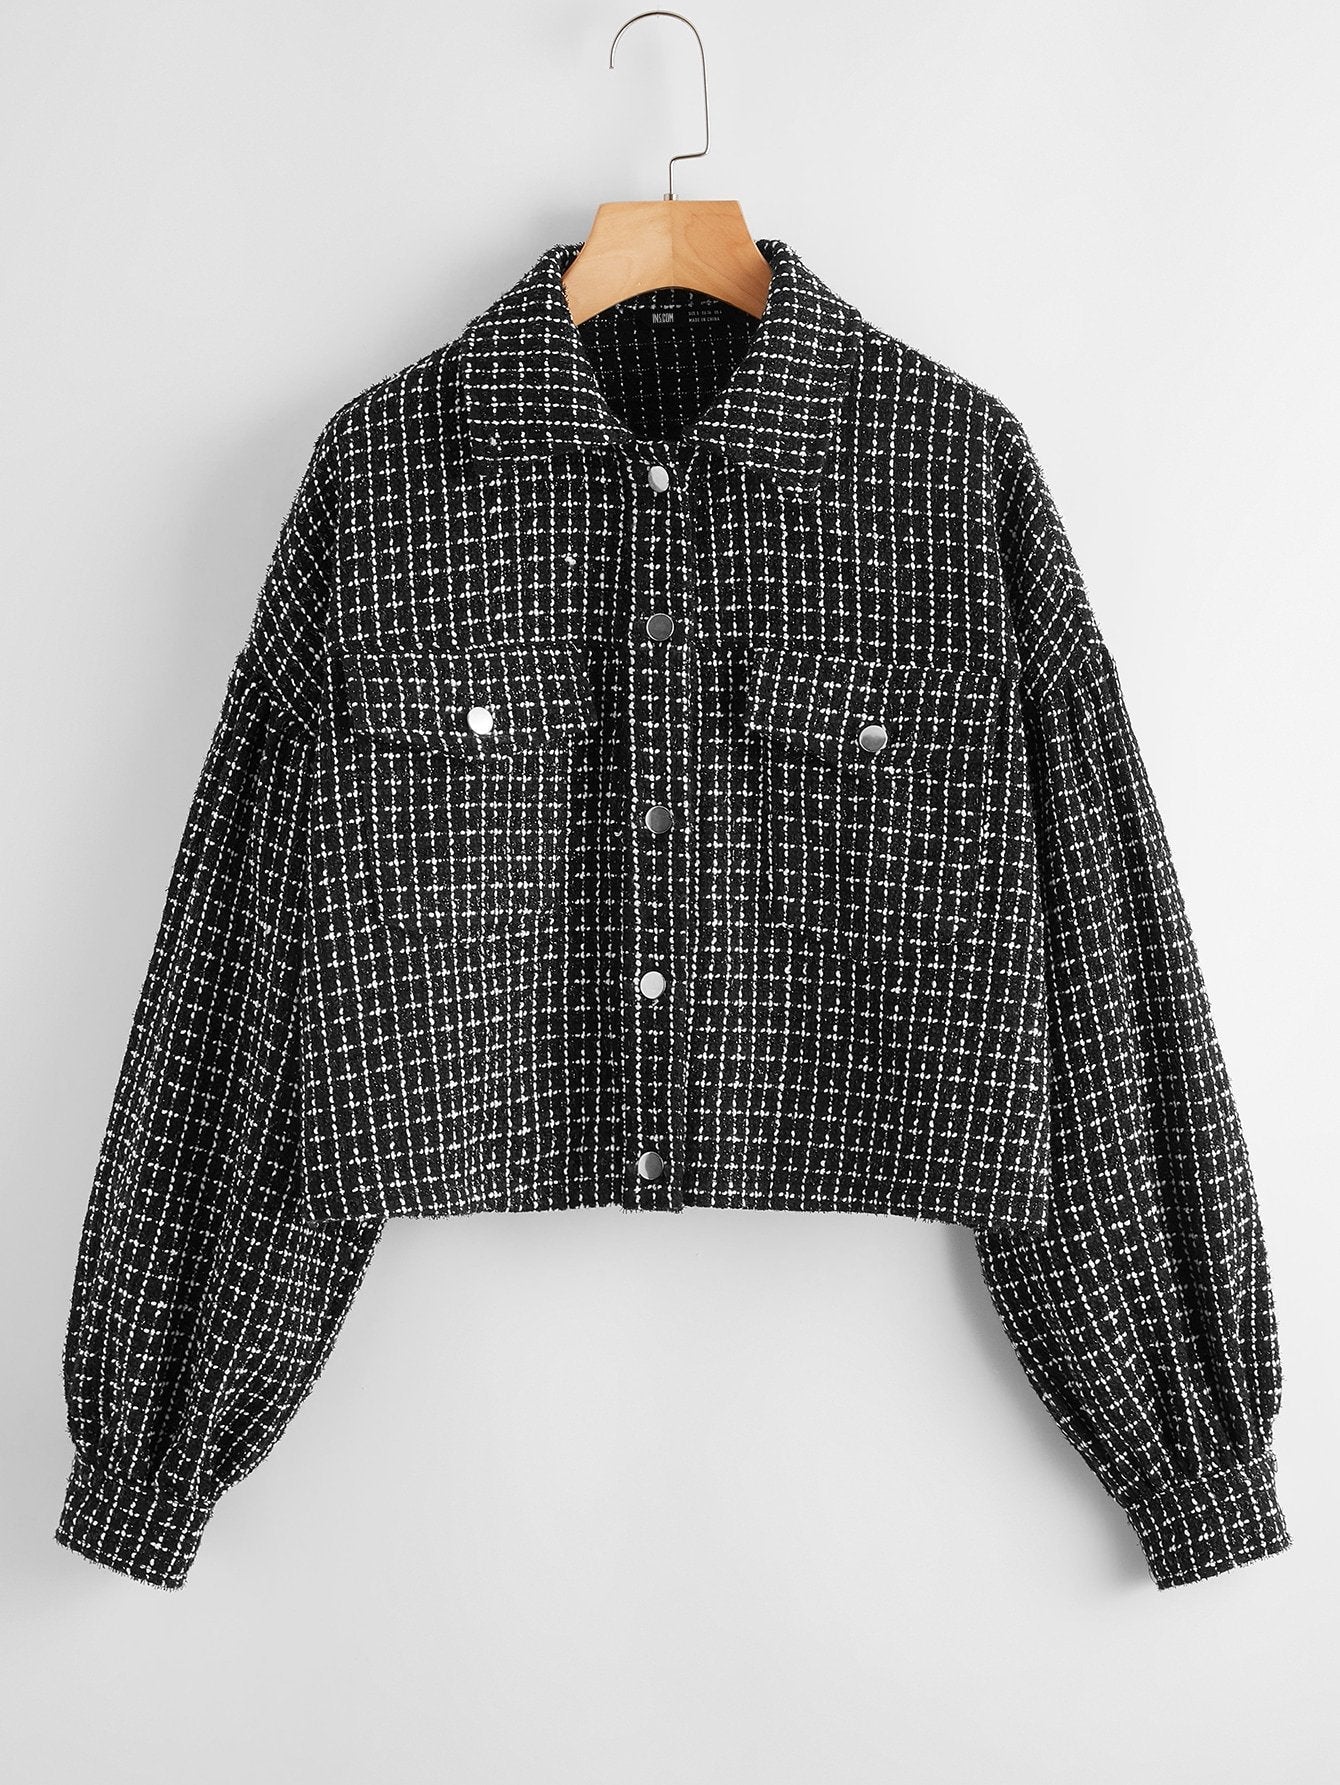 Drop Shoulder Flap Pocket Grid Tweed Jacket - INS | Online Fashion Free Shipping Clothing, Dresses, Tops, Shoes